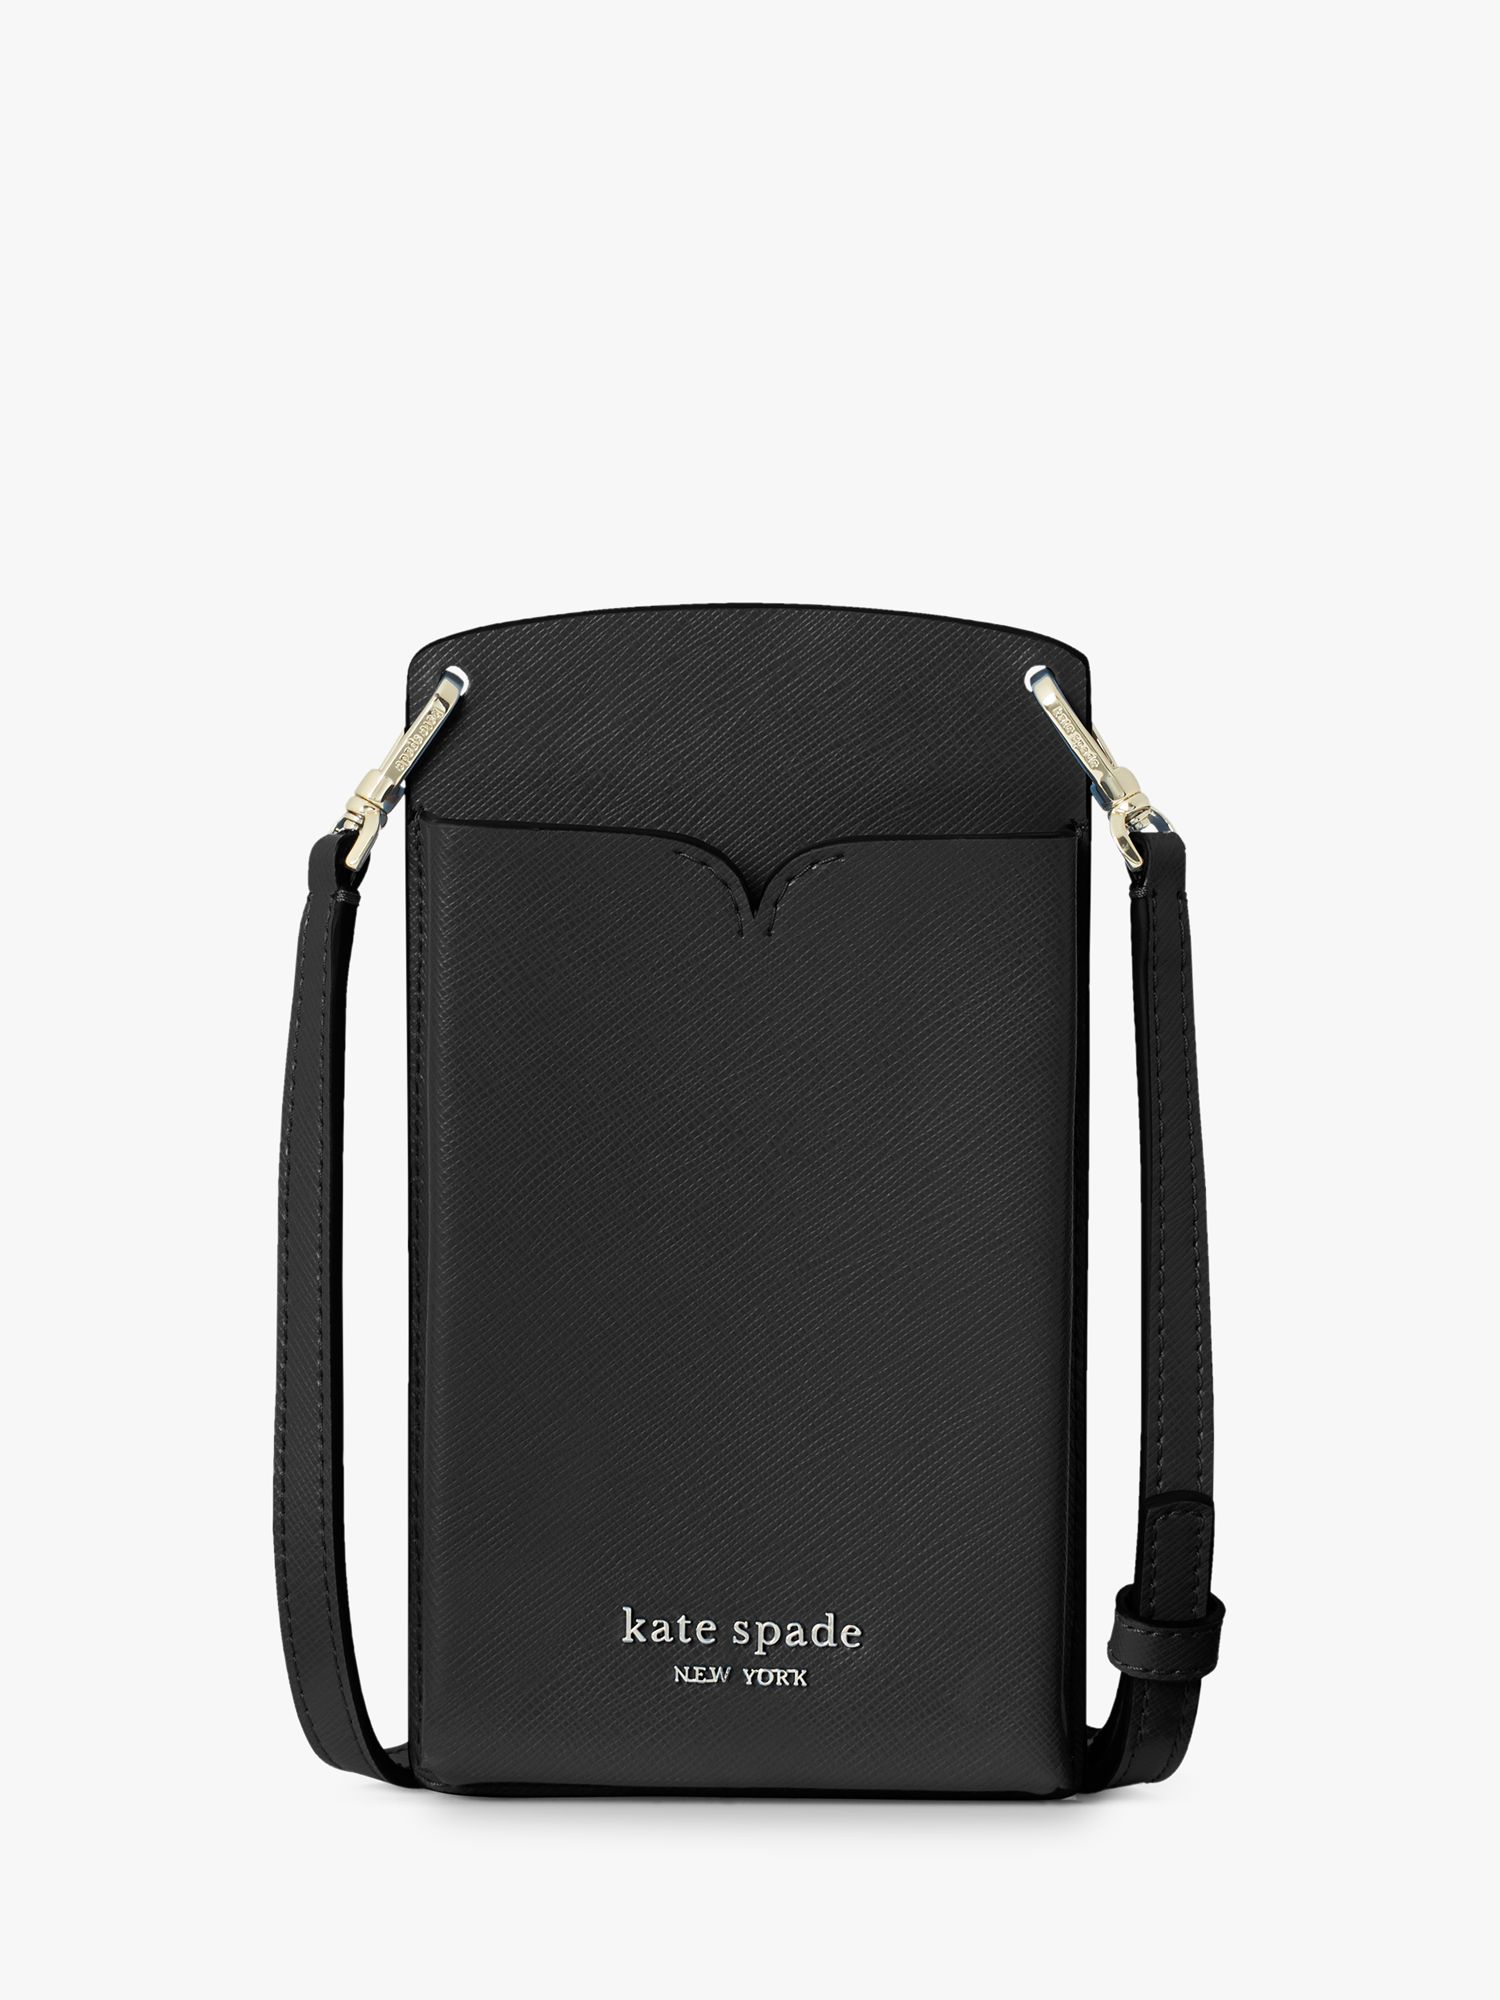 kate spade new york Spencer Slim Leather Phone Cross Body Bag, Black